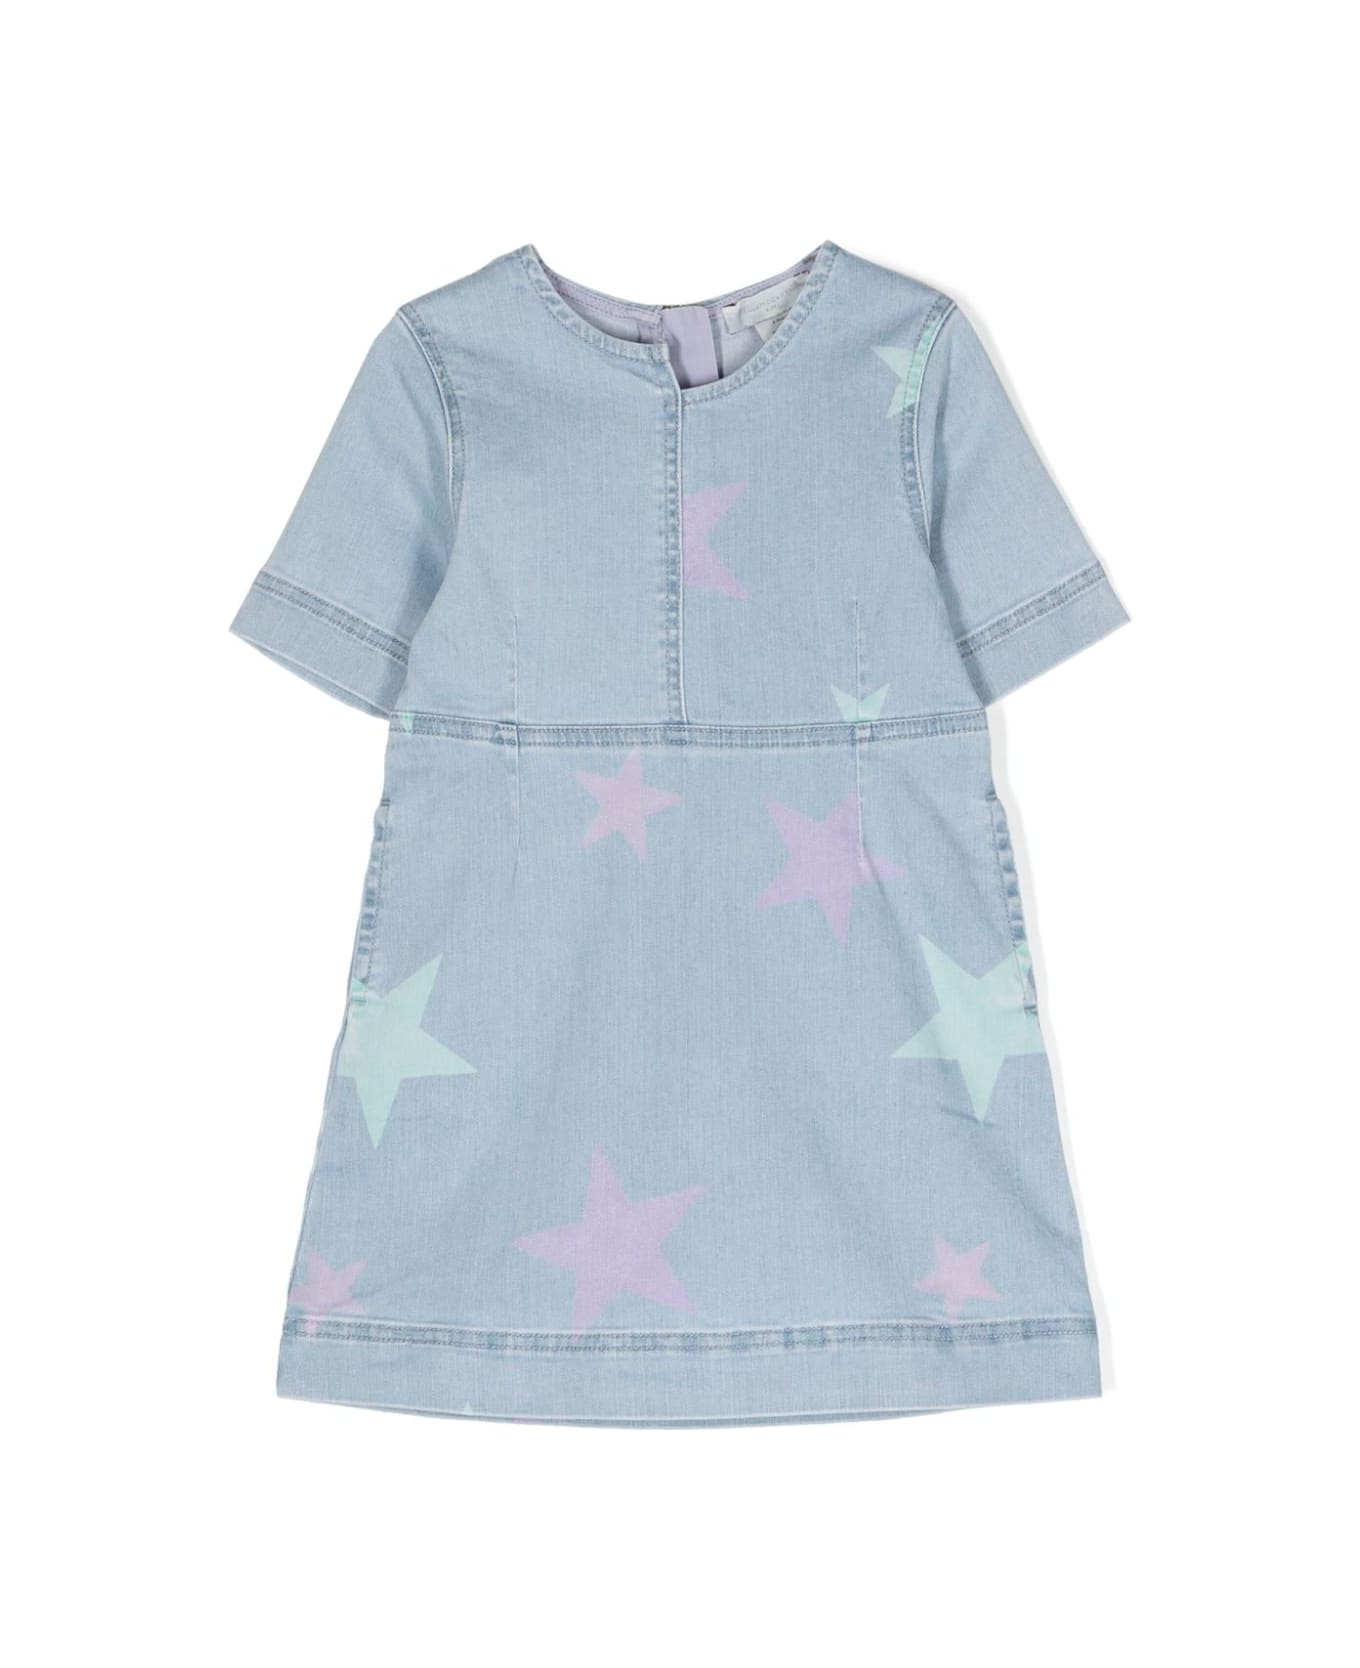 Stella McCartney Kids Denim T-shirt Dress With Star Print - Blue